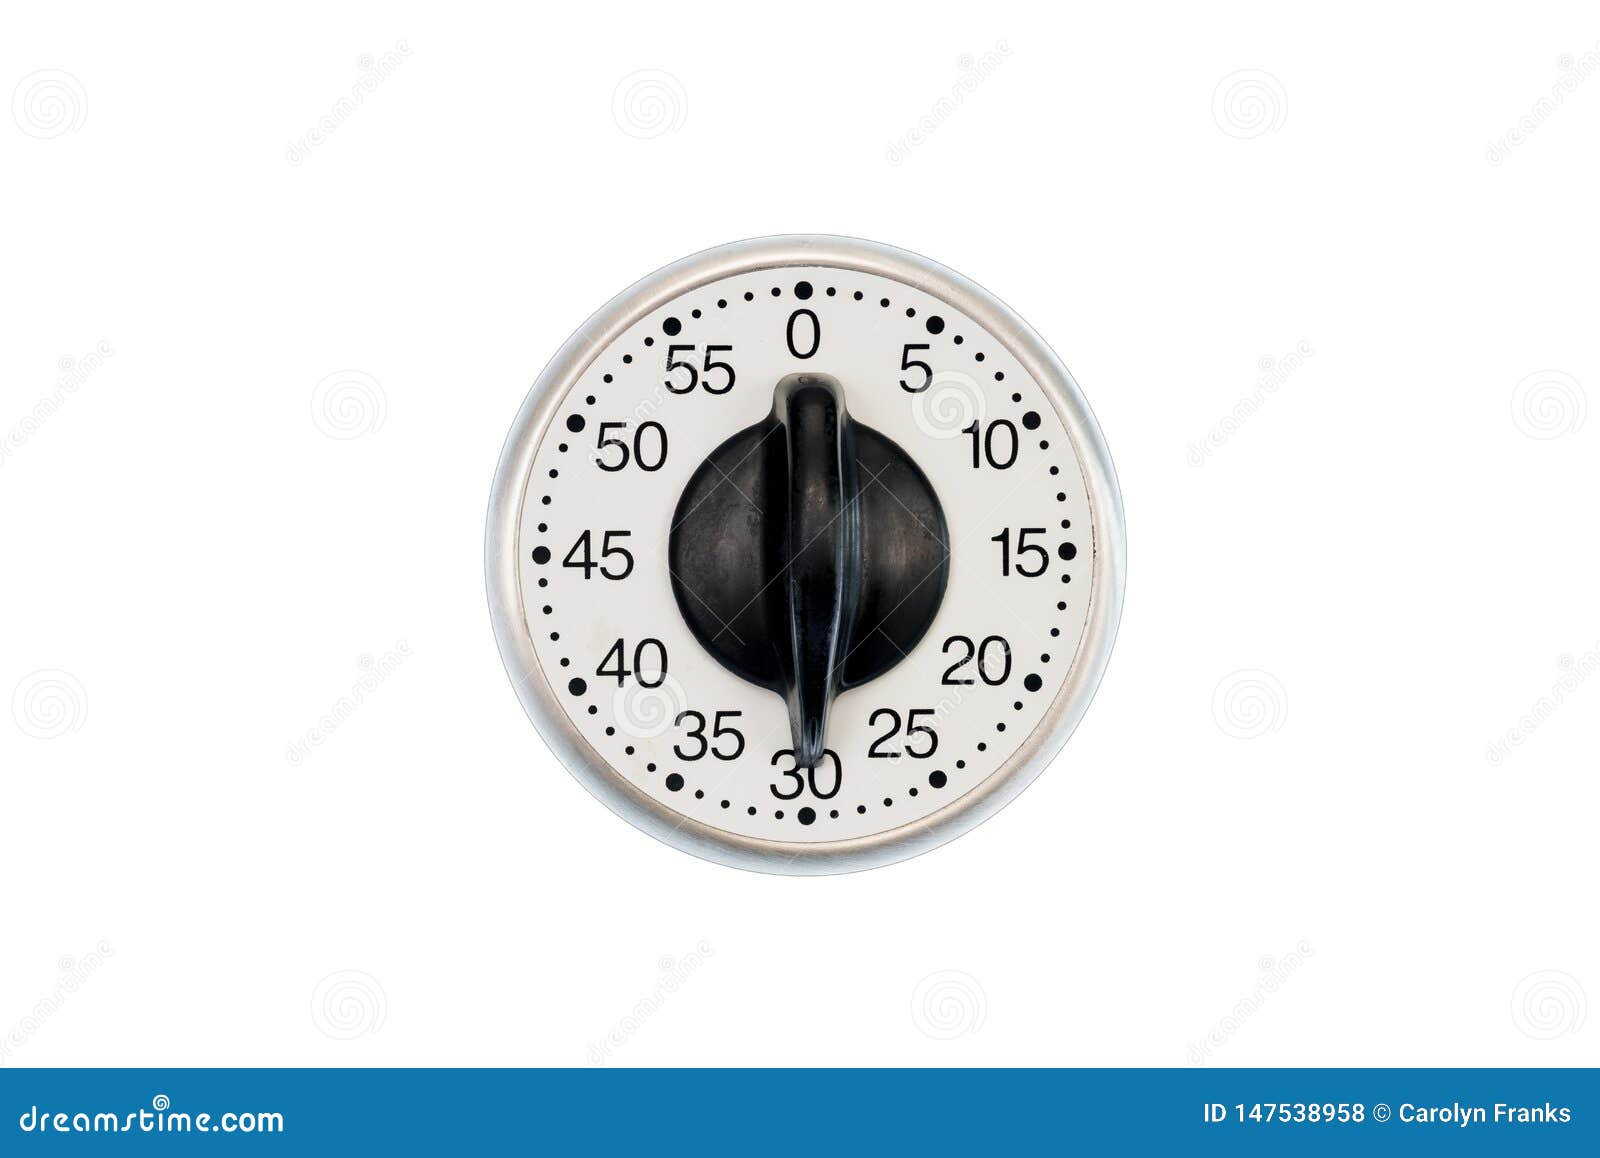 set a timer for 40 minutes